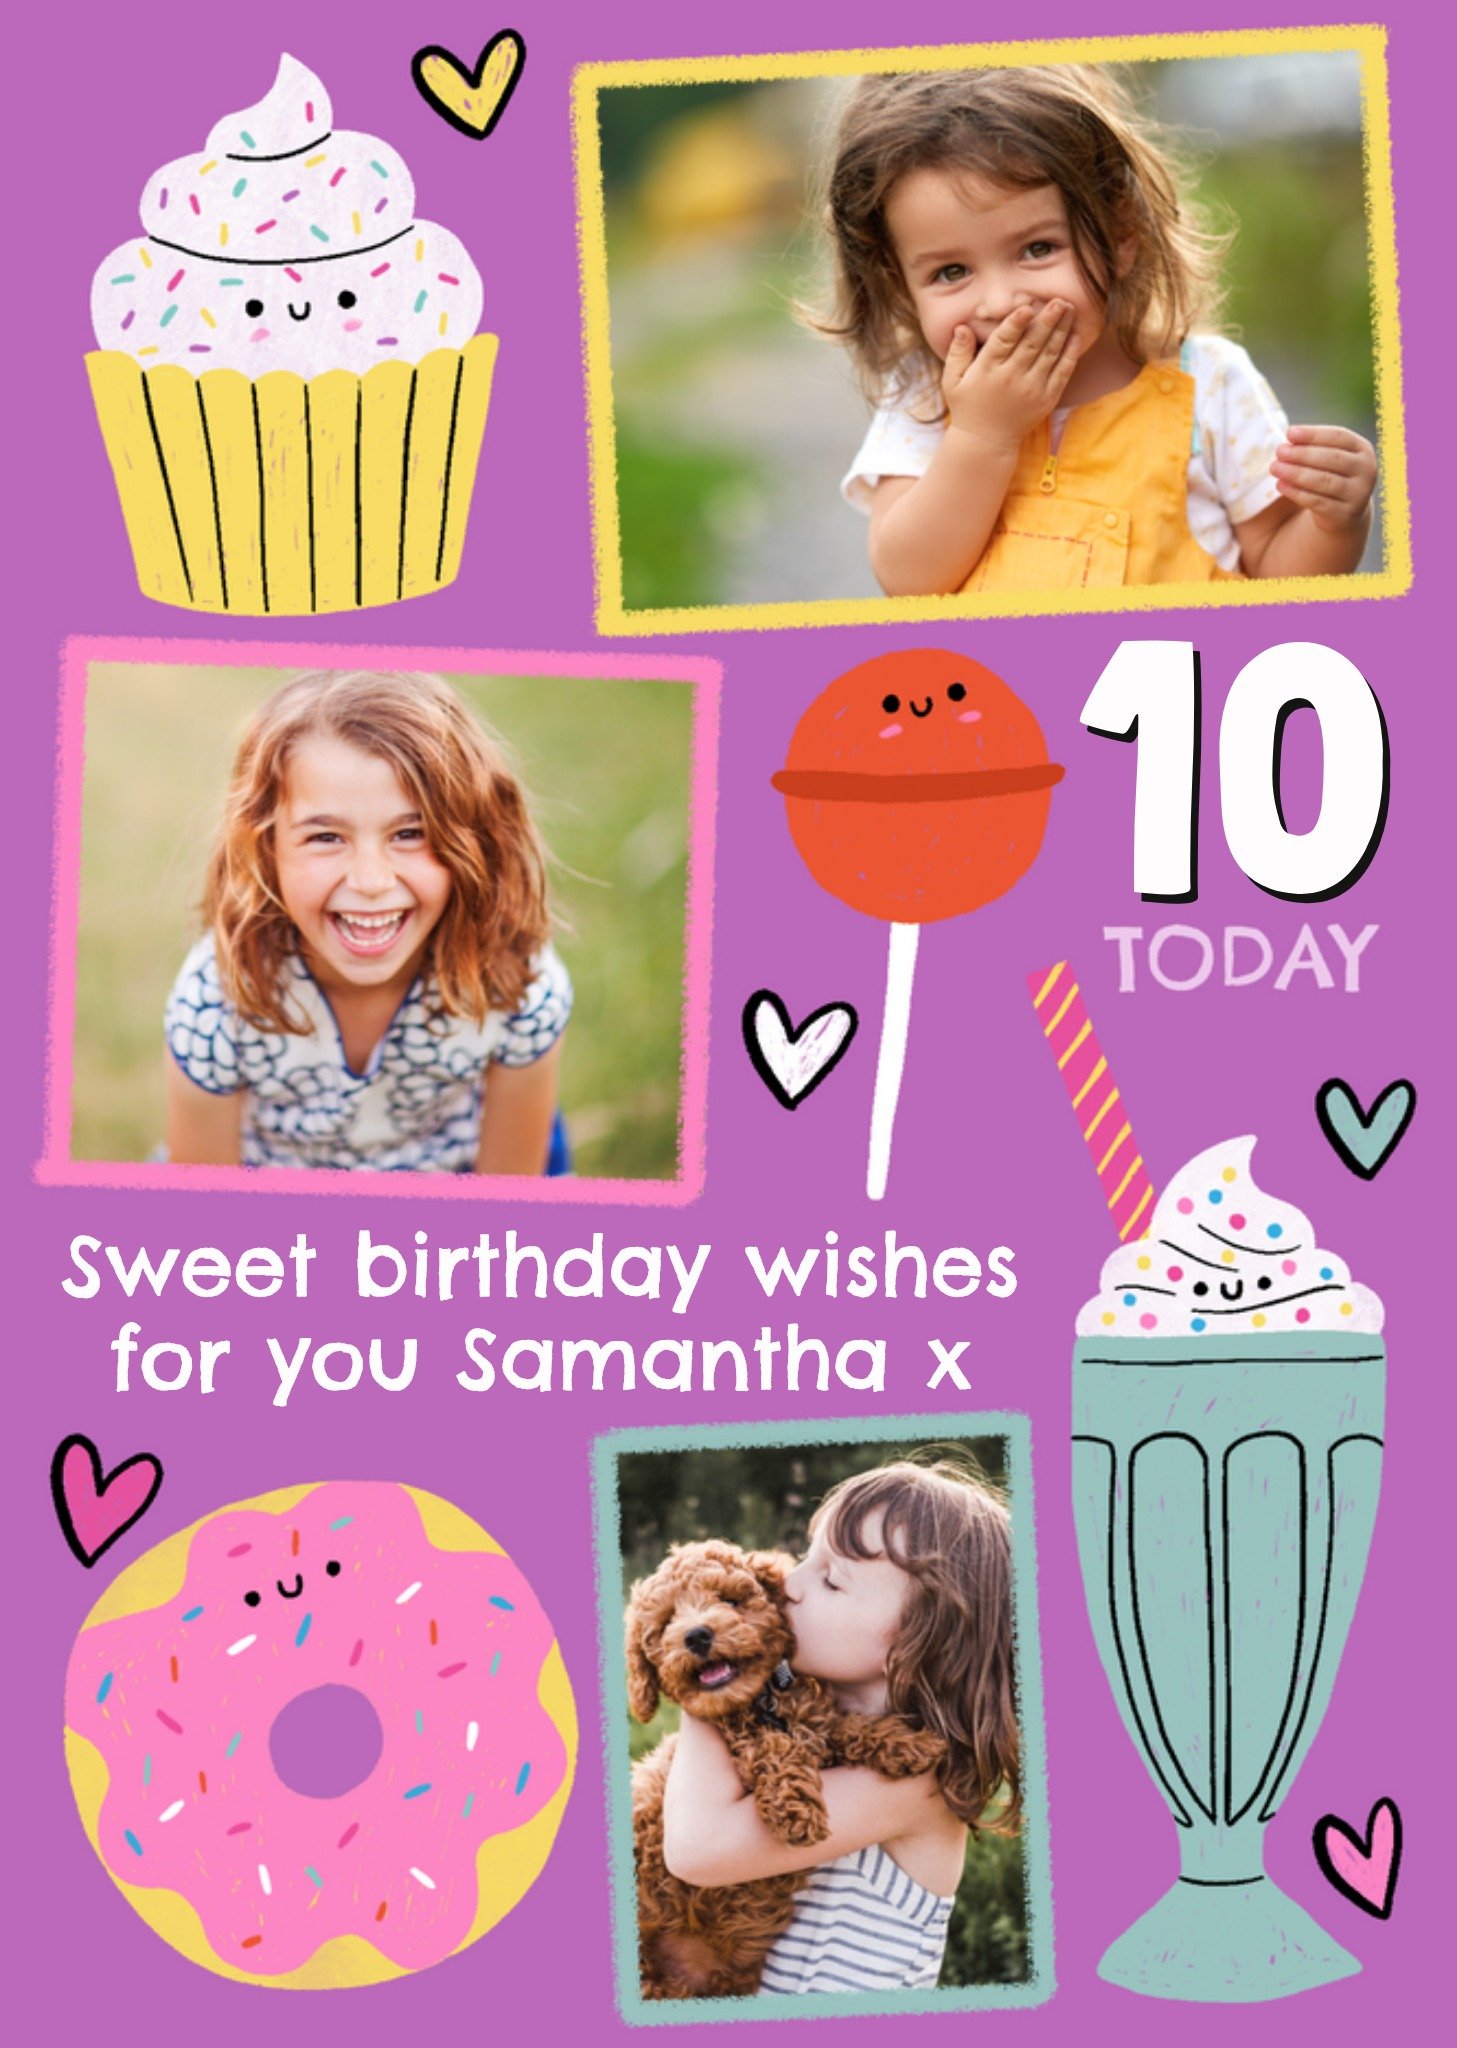 Moonpig Lisa Barlow Designs 10 Today Sweet Birthday Wishes Illustrated Photo Upload Birthday Card, L